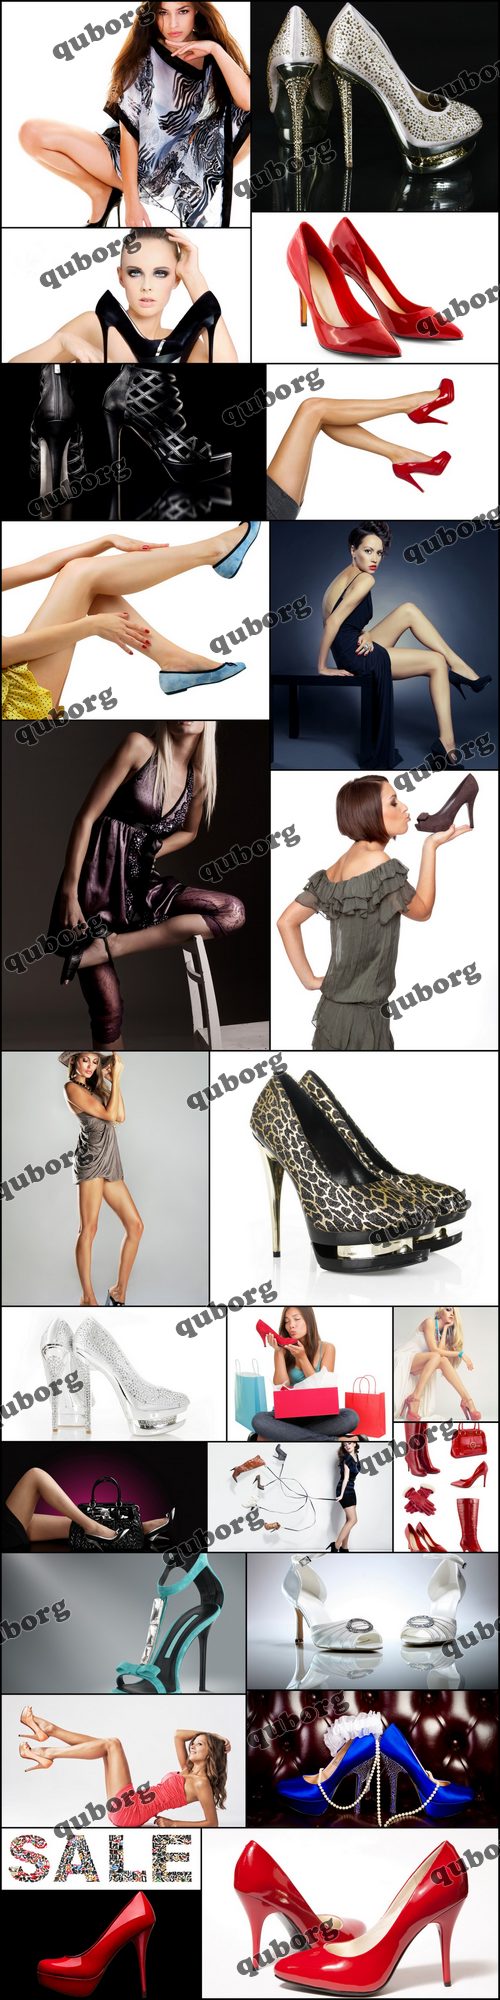 Stock Photos - Women's Shoes 2